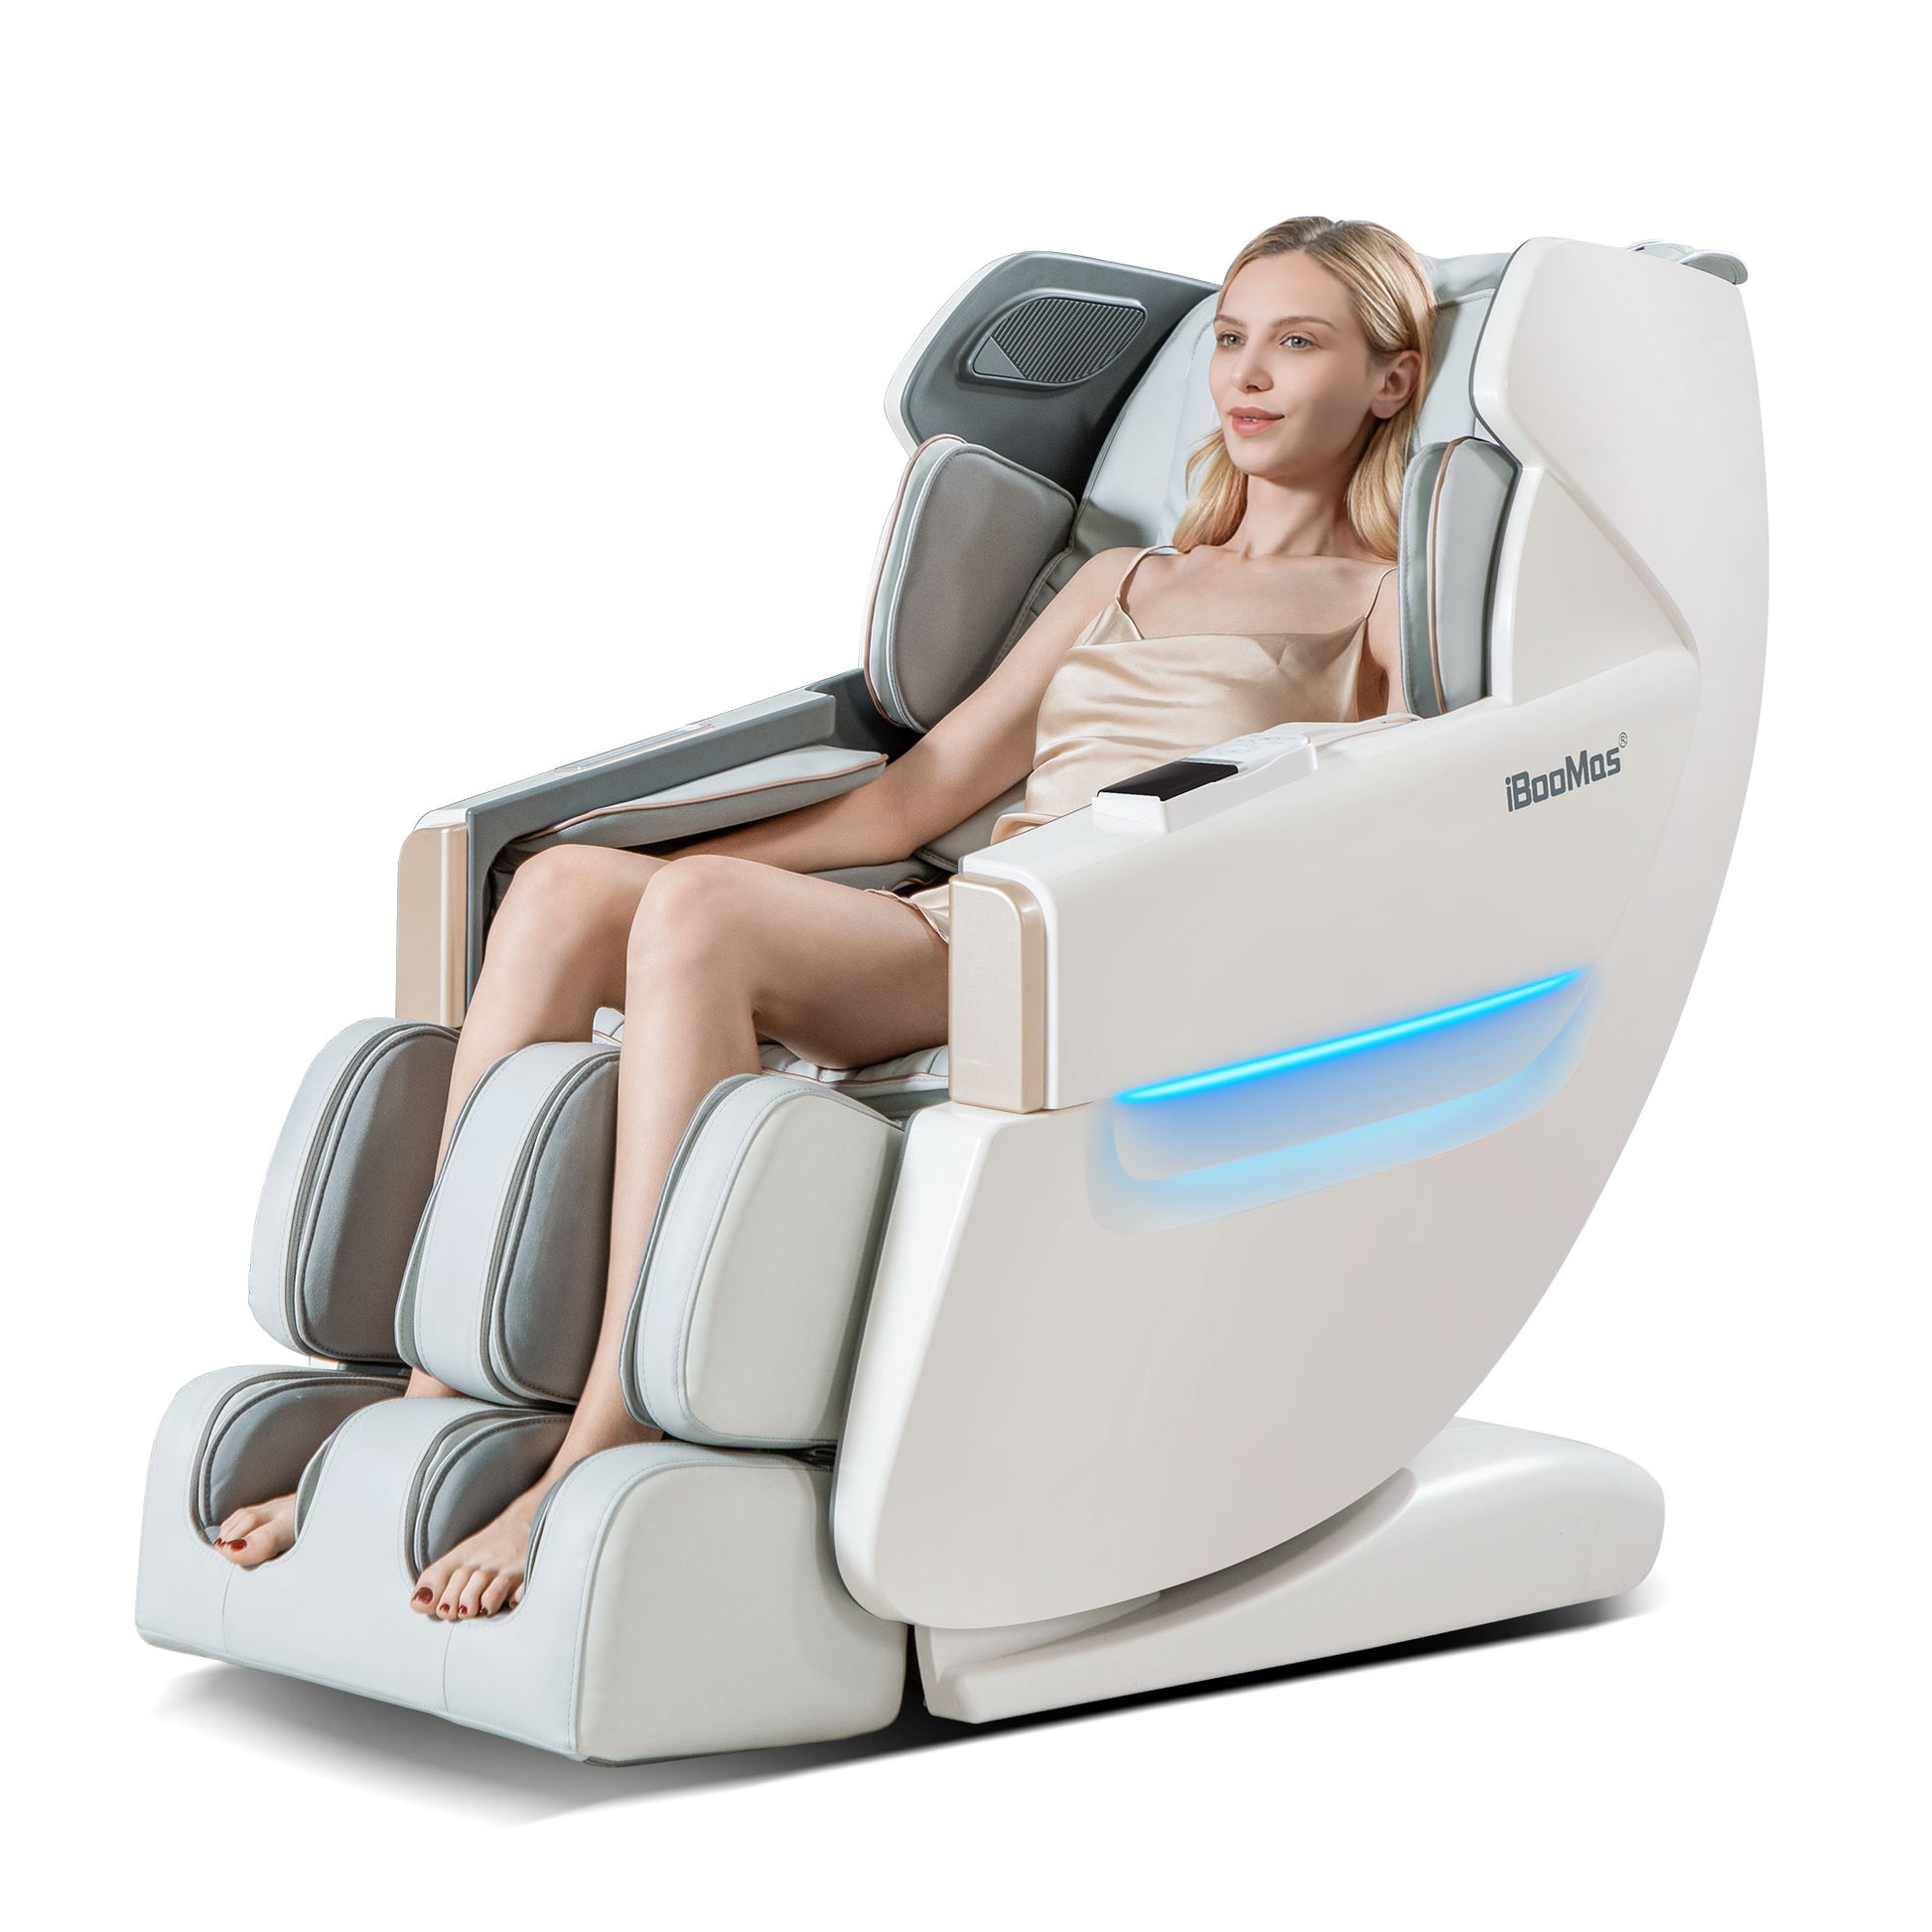 iBooMas R8603  AI Voice Control Back&Foot Heating Zero Gravity Massage Chair Full Body